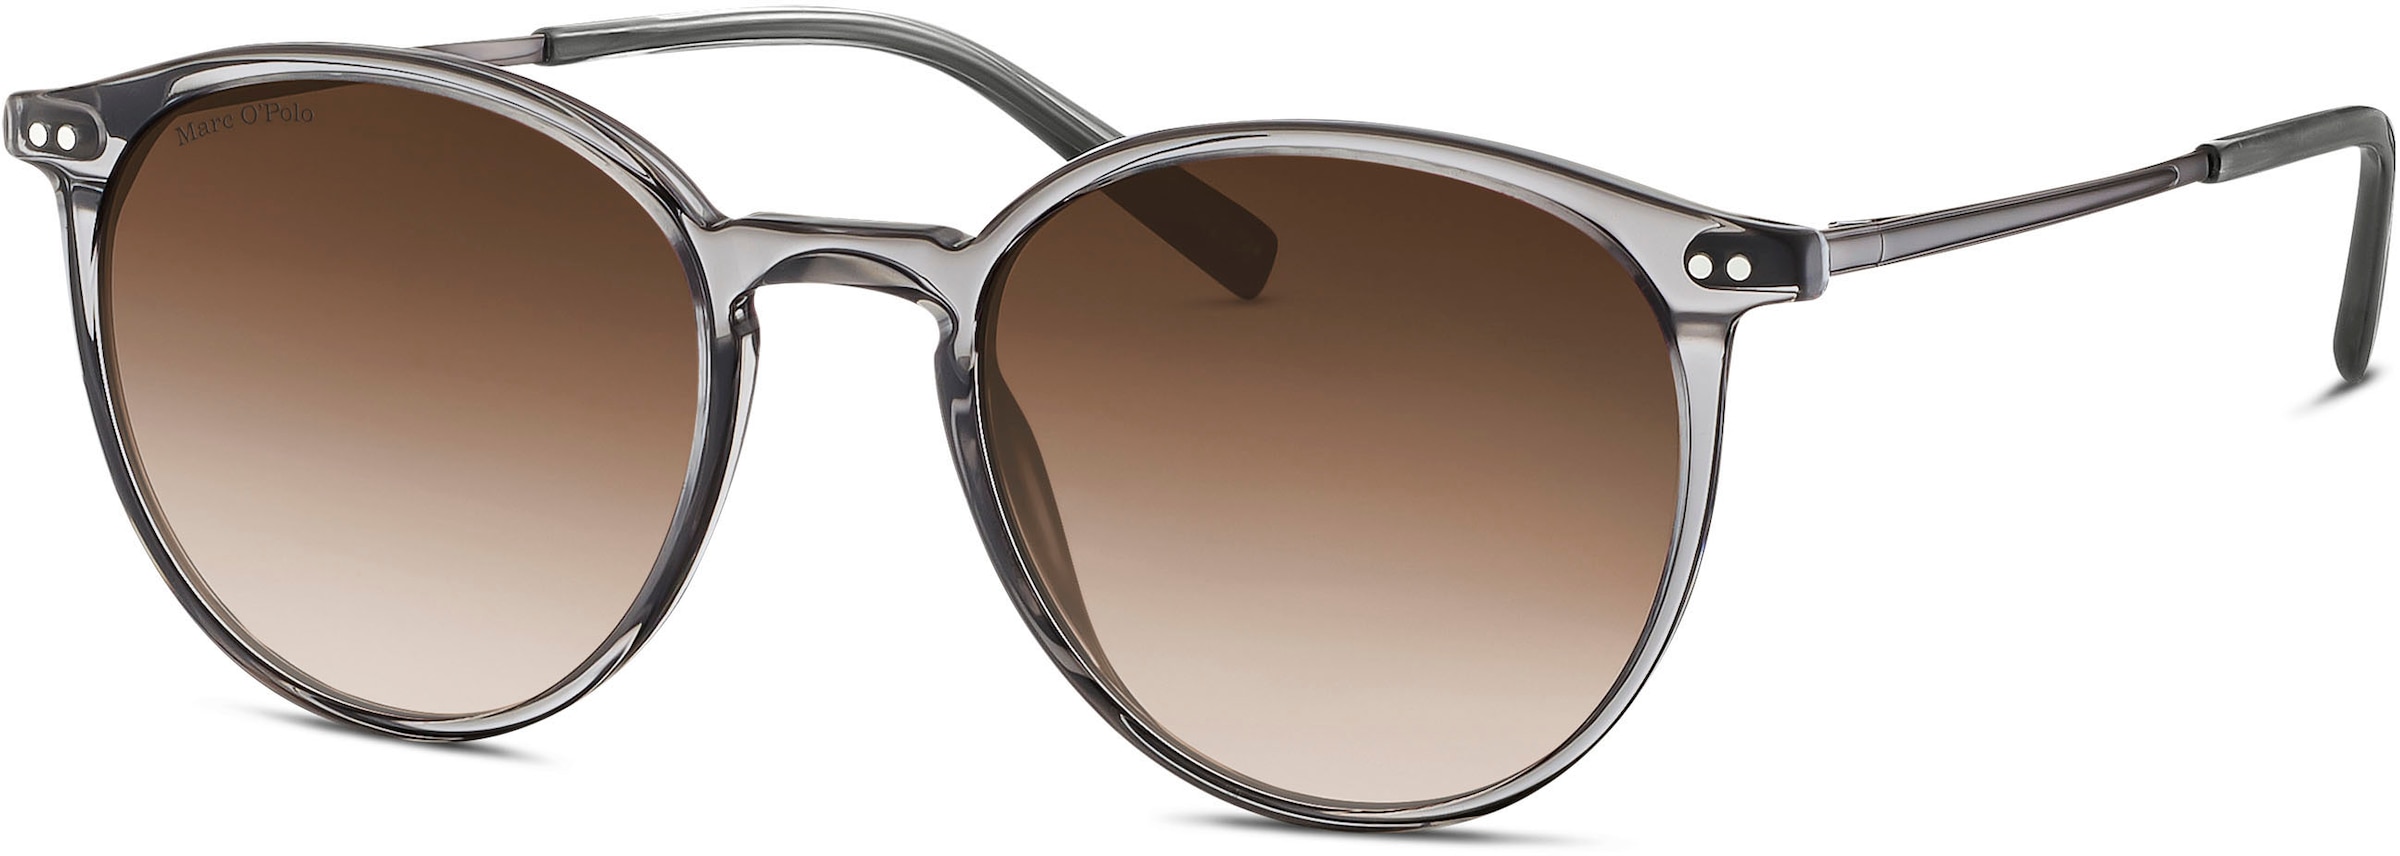 Sonnenbrille »Modell 506183«, Panto-Form